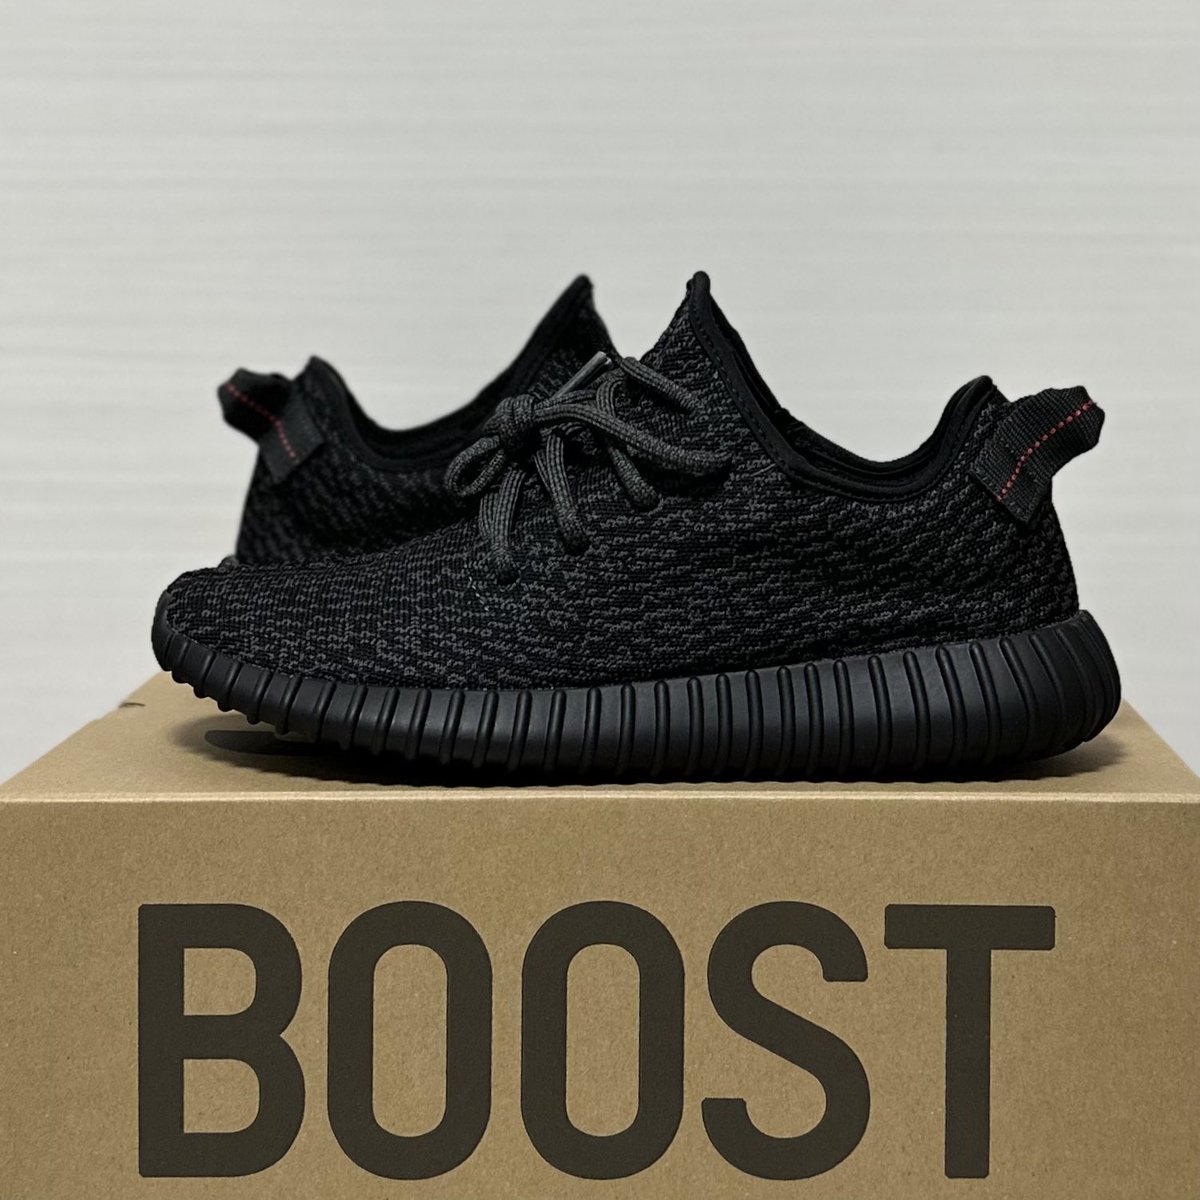 New Kicks 👟🔥
Adidas Yeezy Boost 350 Pirate Black 🍁🖤🔥
#NewKicks
#Adidas #YeezyBoost350 #PirateBlack 
#Sneaker
#アディダス #イージーブースト350 #パイレーツブラック
#スニーカー
instagram.com/p/CtmFWl0v1O8/